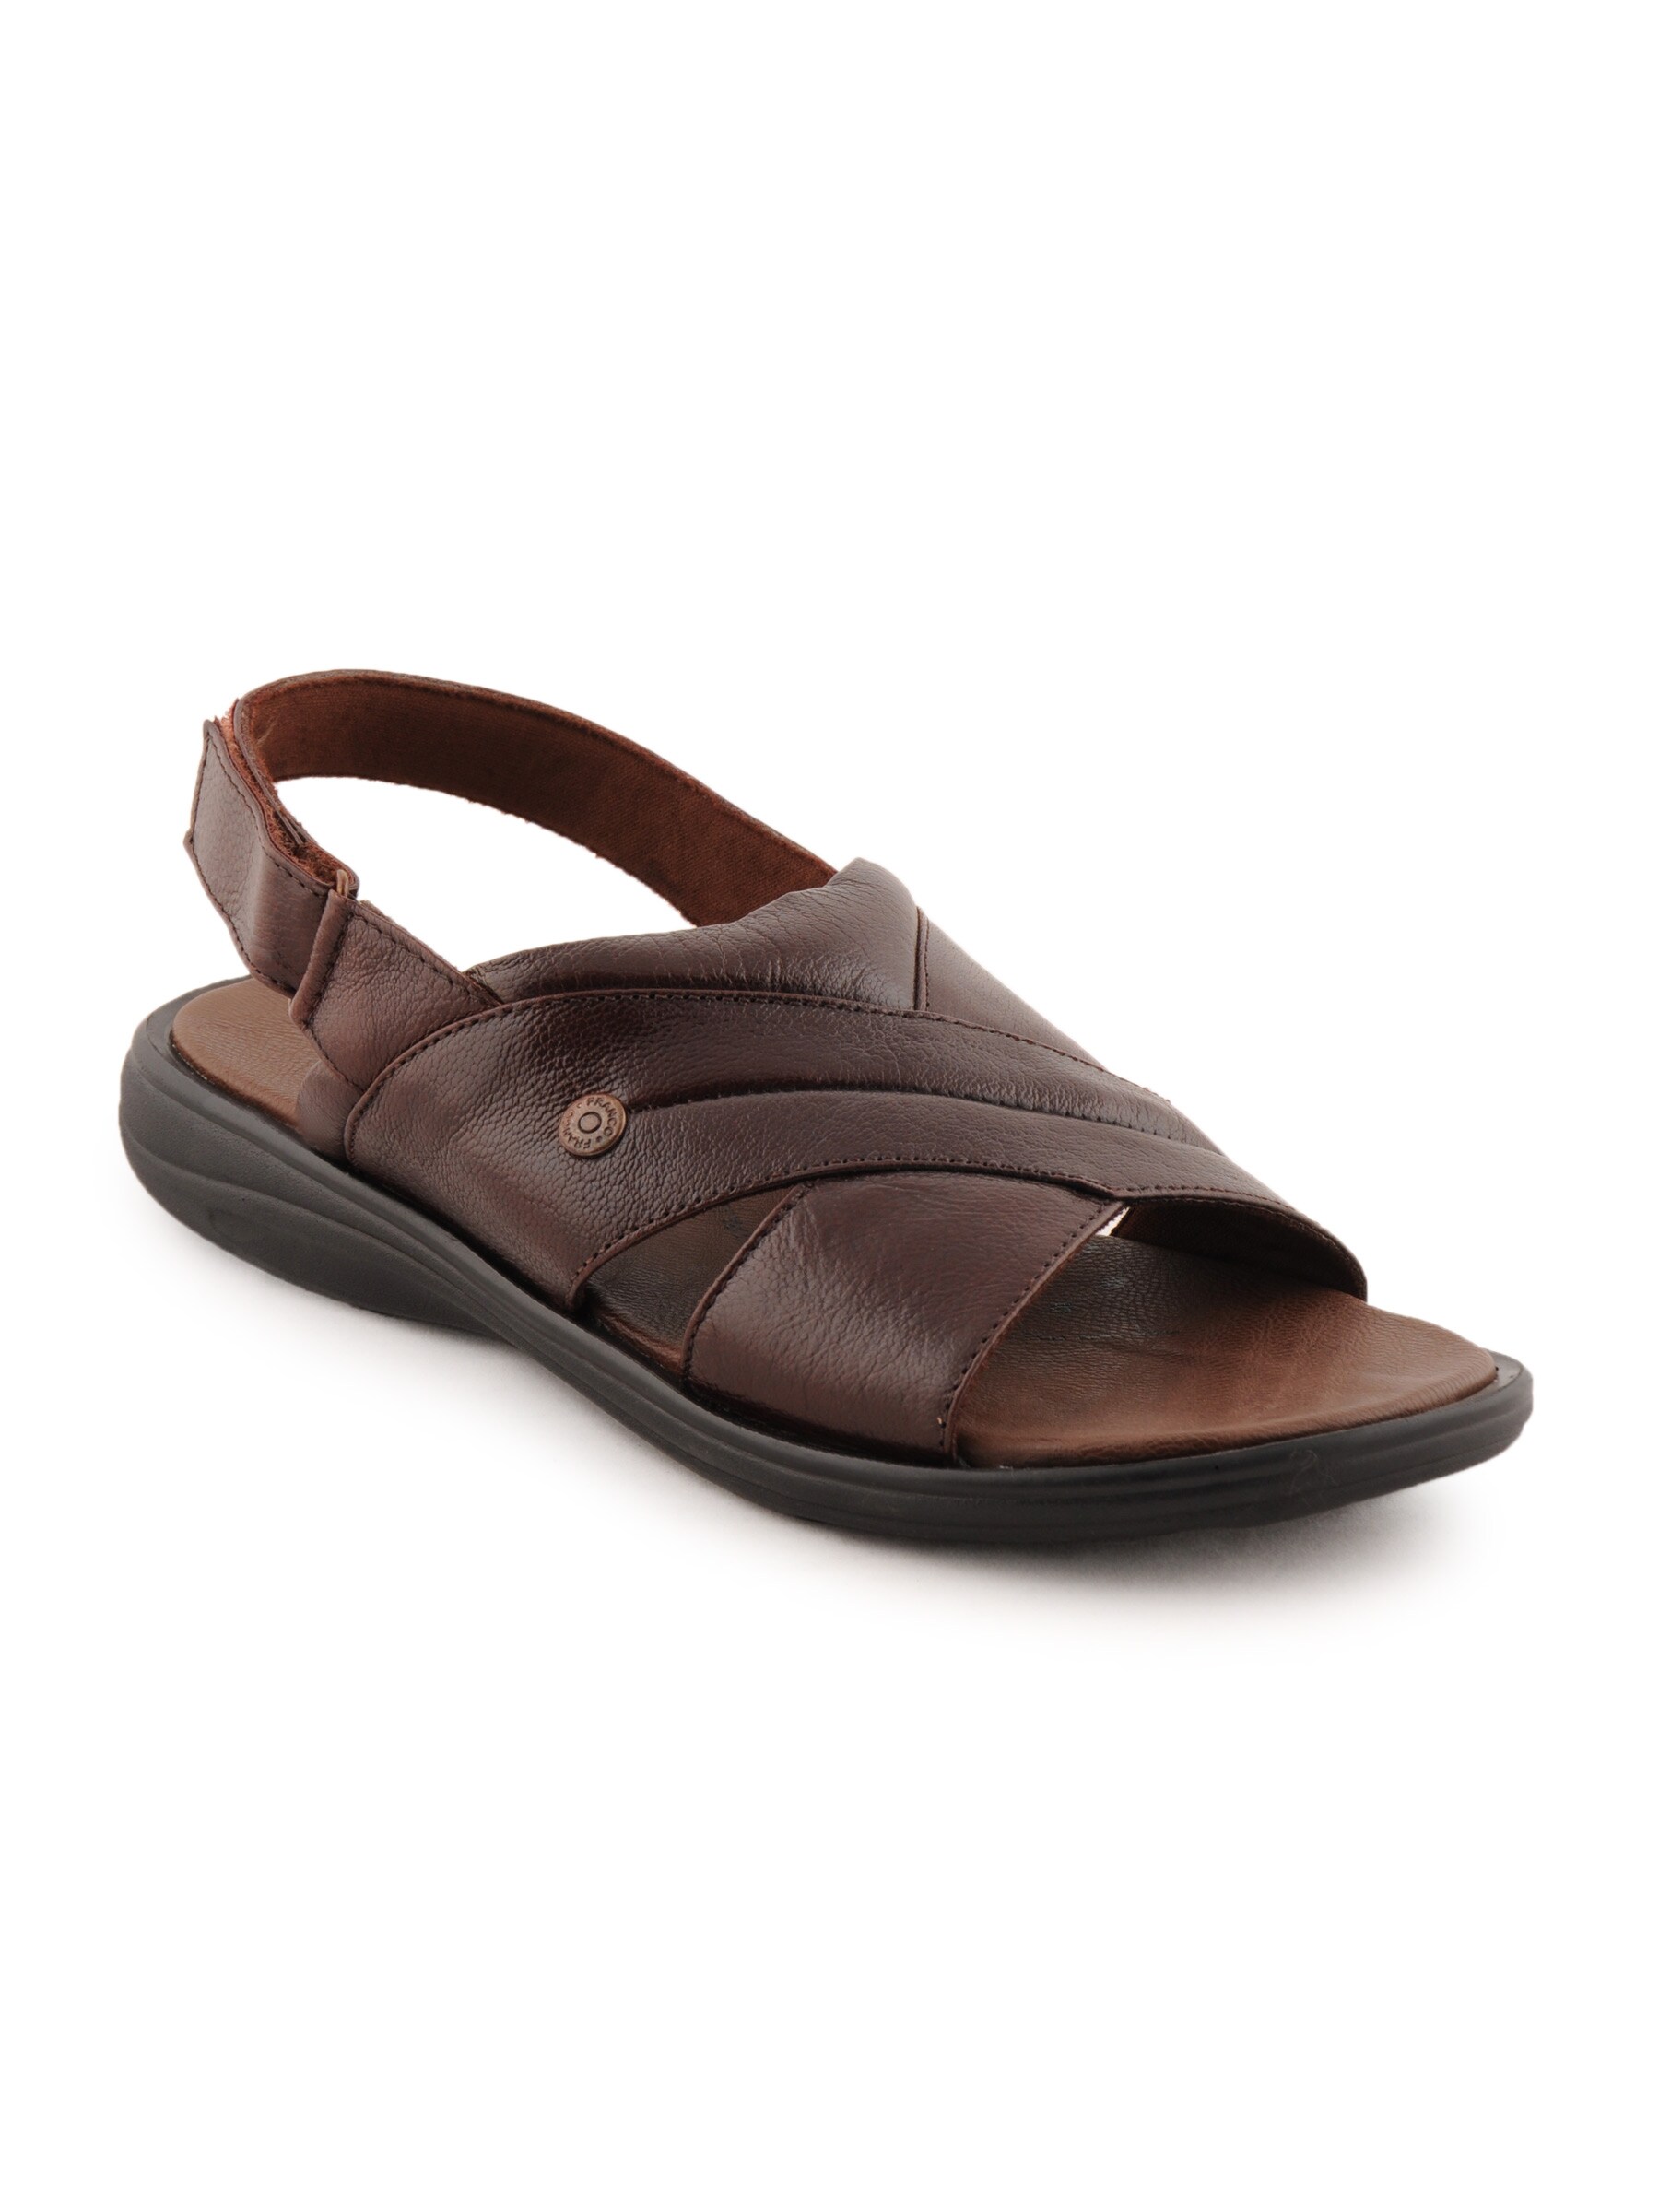 Franco Leone Men Casual Maroon Sandals